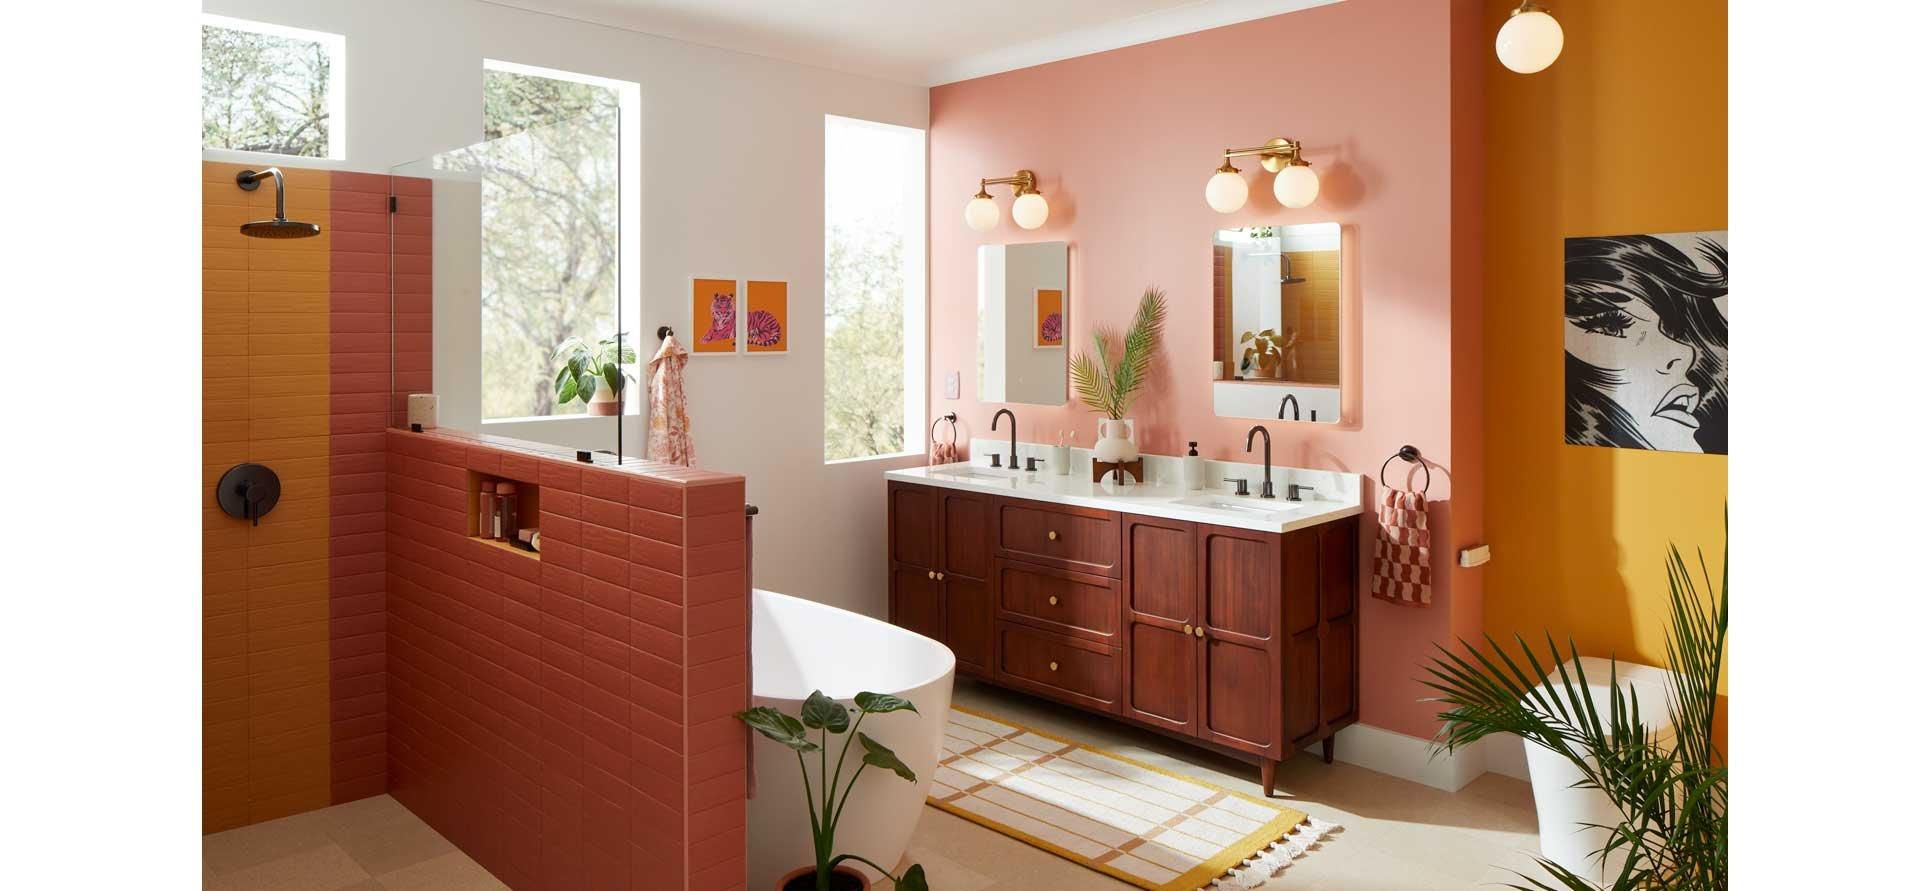 statement bathroom with 72" Delavan Bathroom Vanity, Lexia Widespread Faucet, Towel Ring, Pressure Balance Shower in Gunmetal